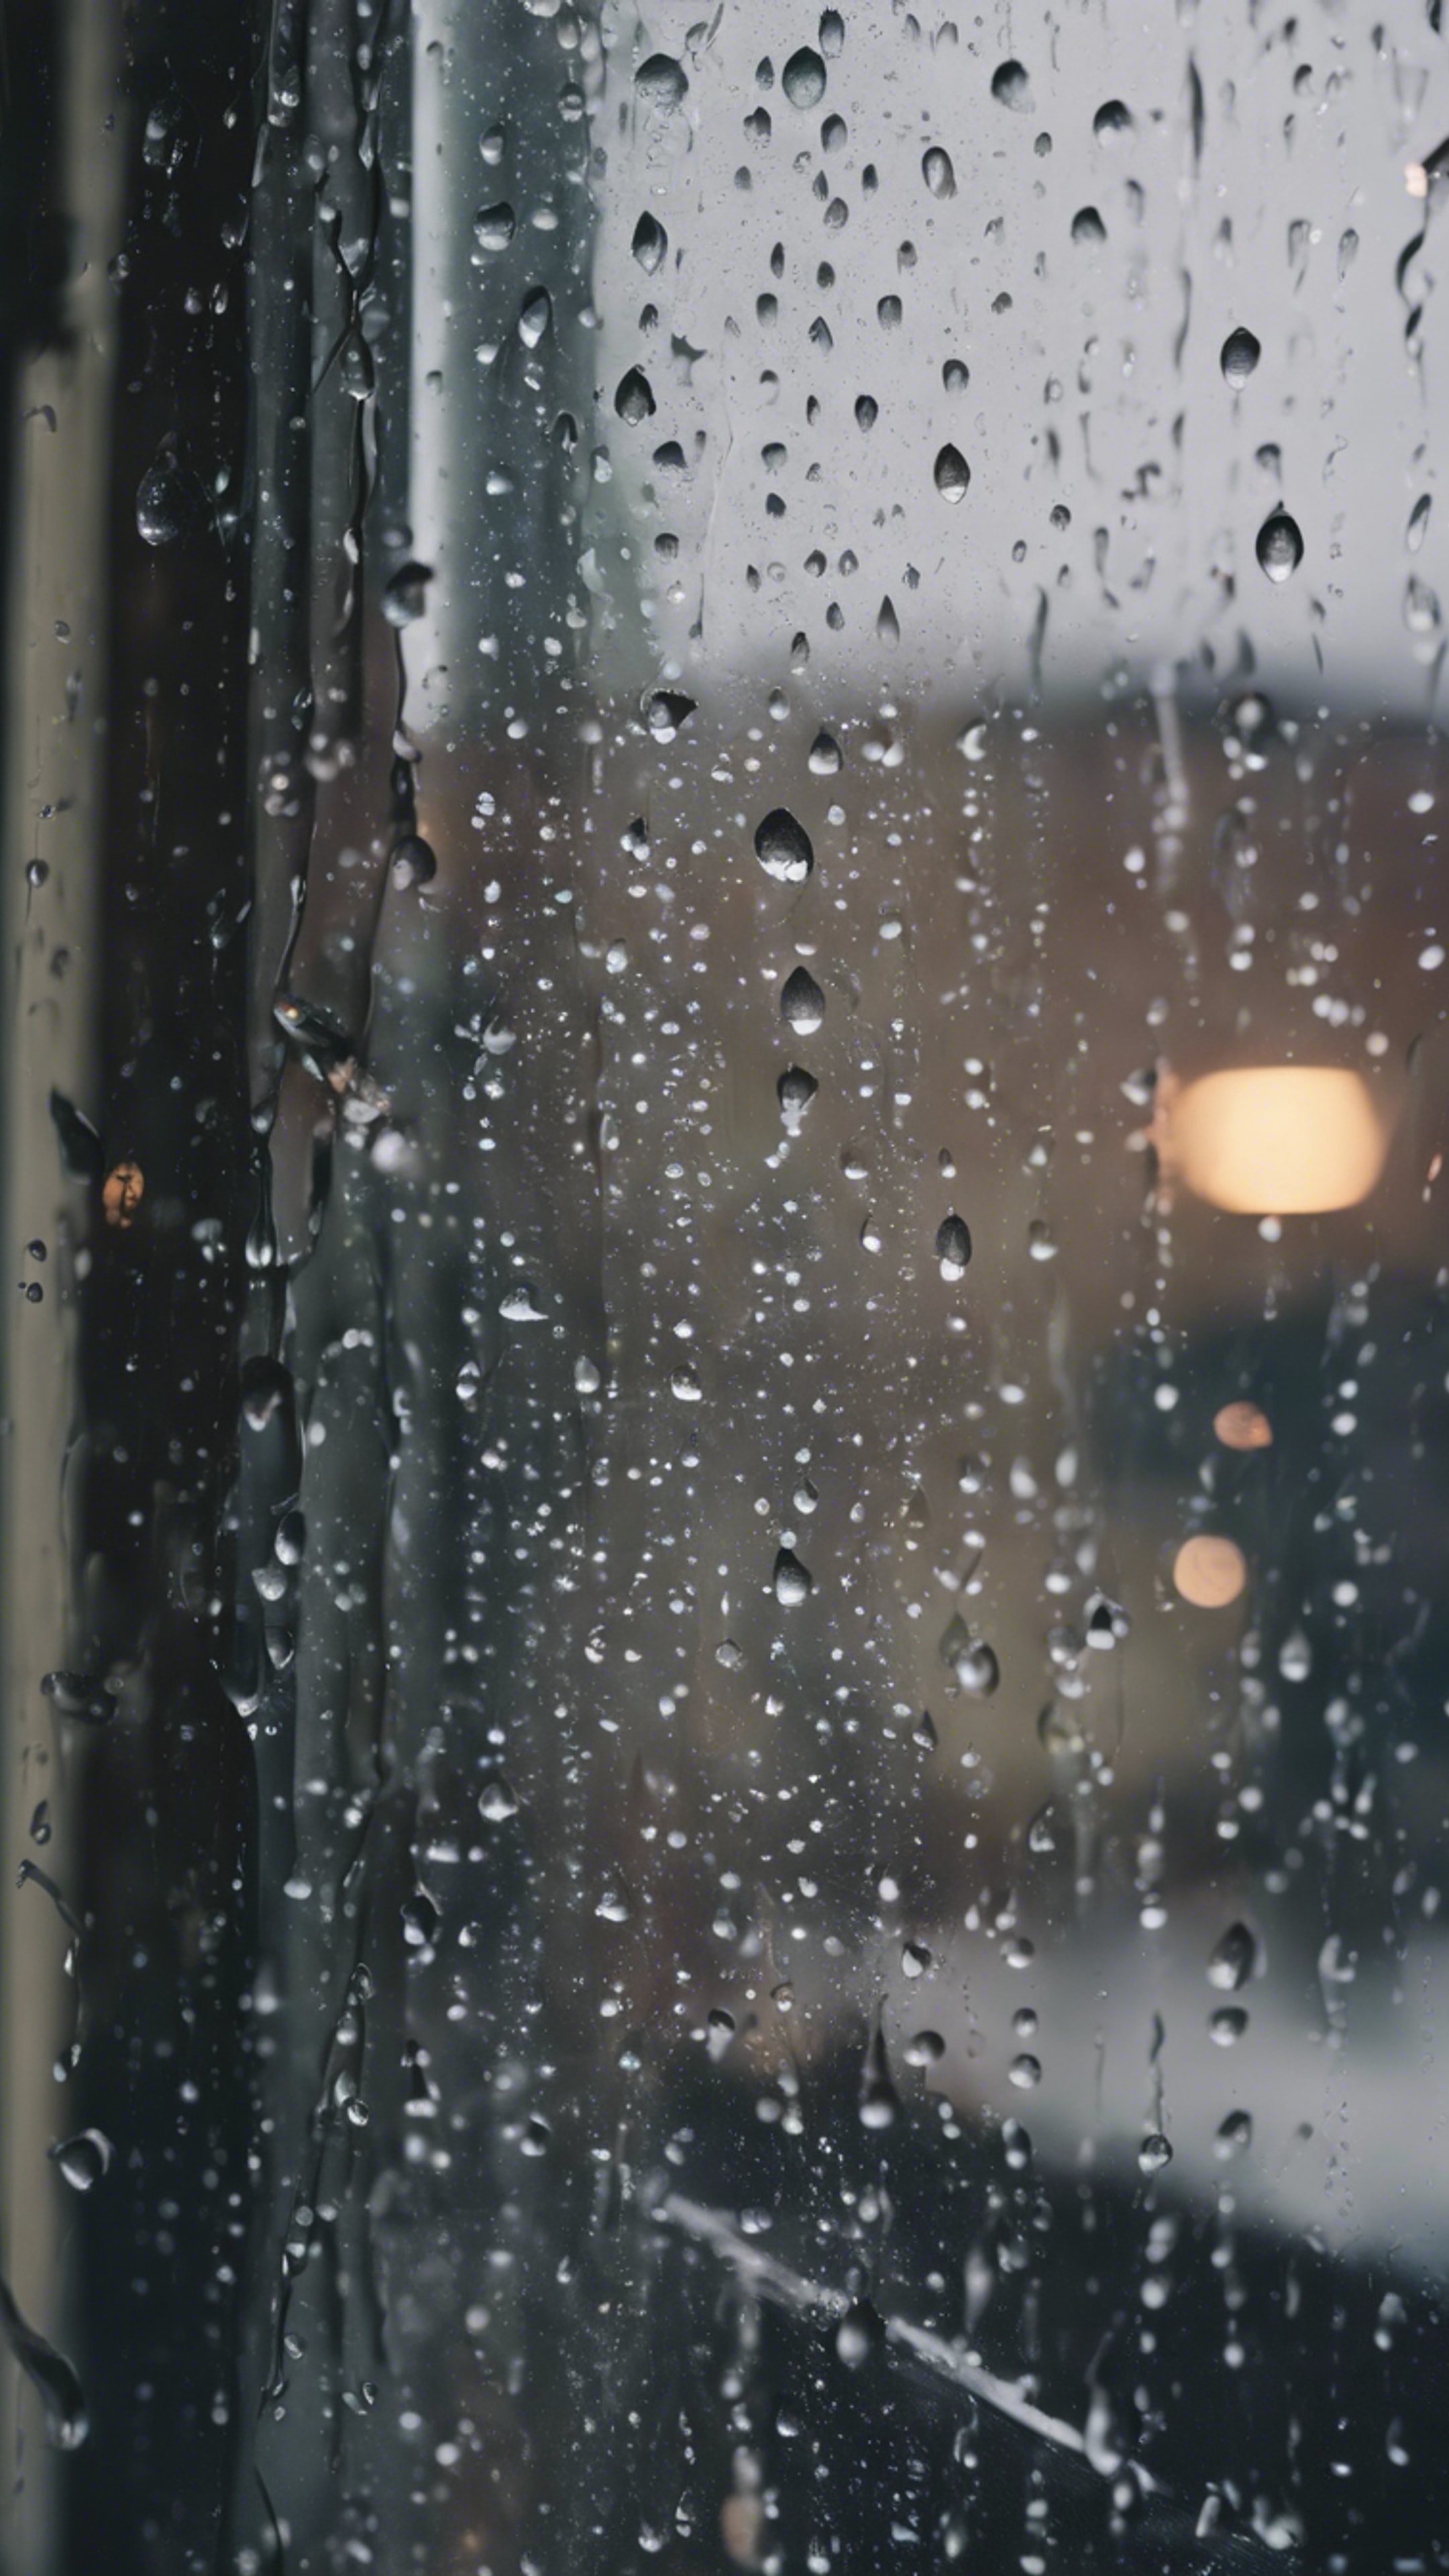 A heavy rainstorm viewed through a window, the droplets streaking down the glass Tapeta[548369da7c5b4ee9bdb0]